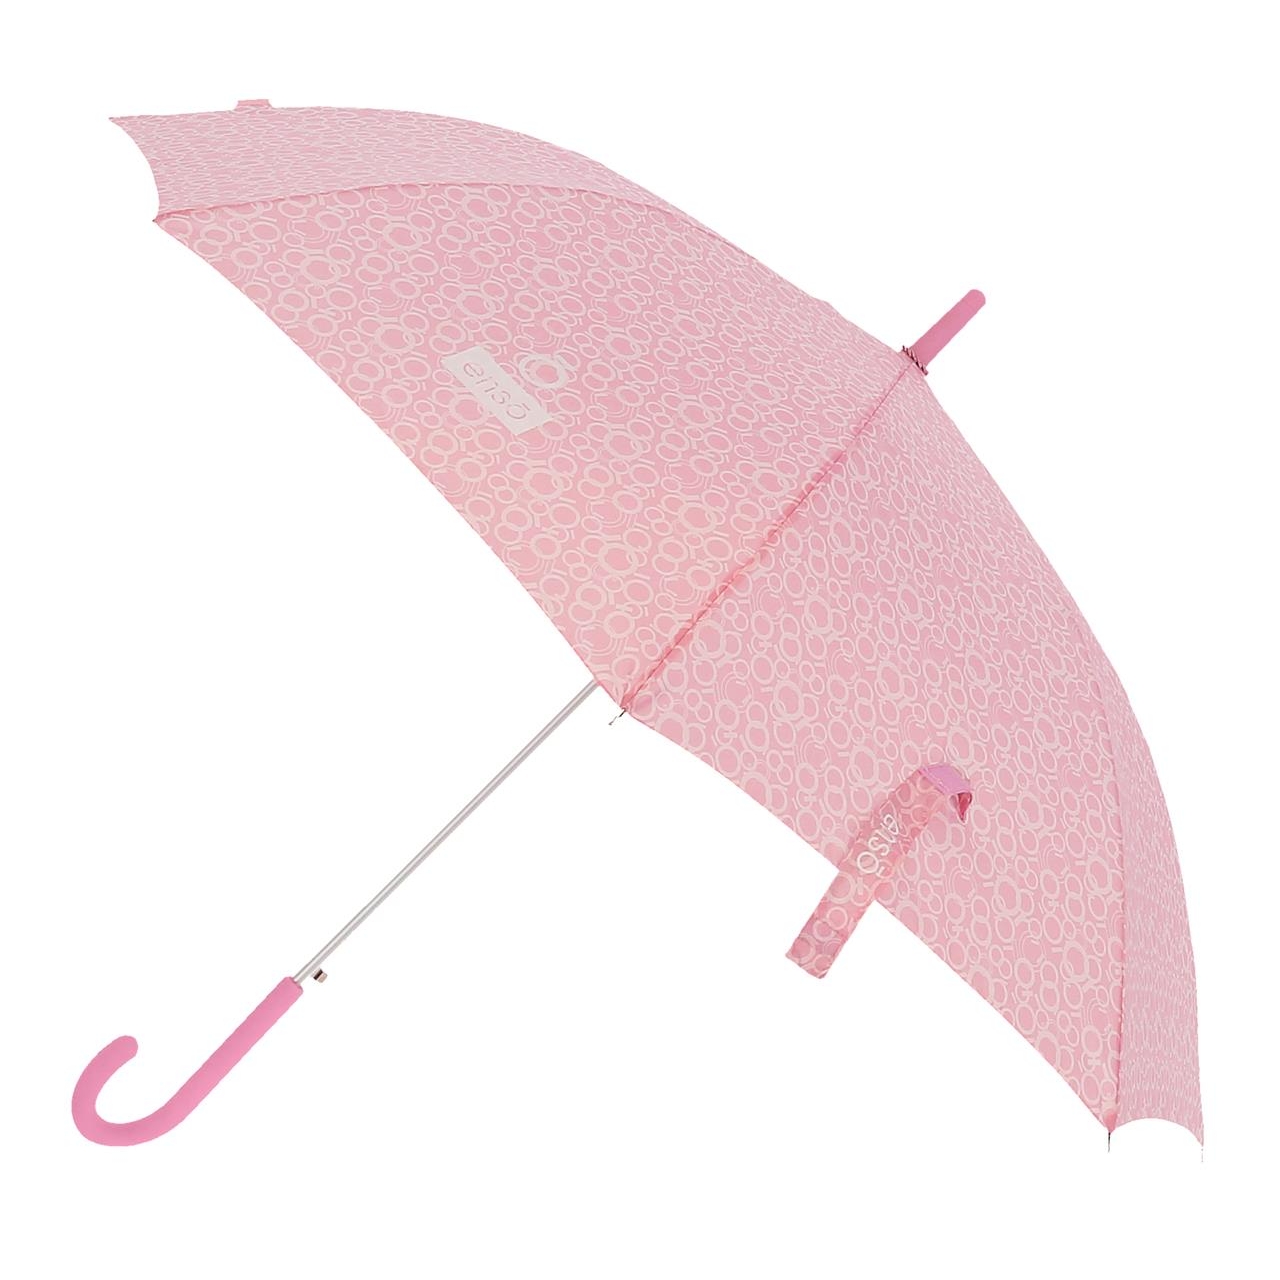 Paraguas Plegable Mess Rosa